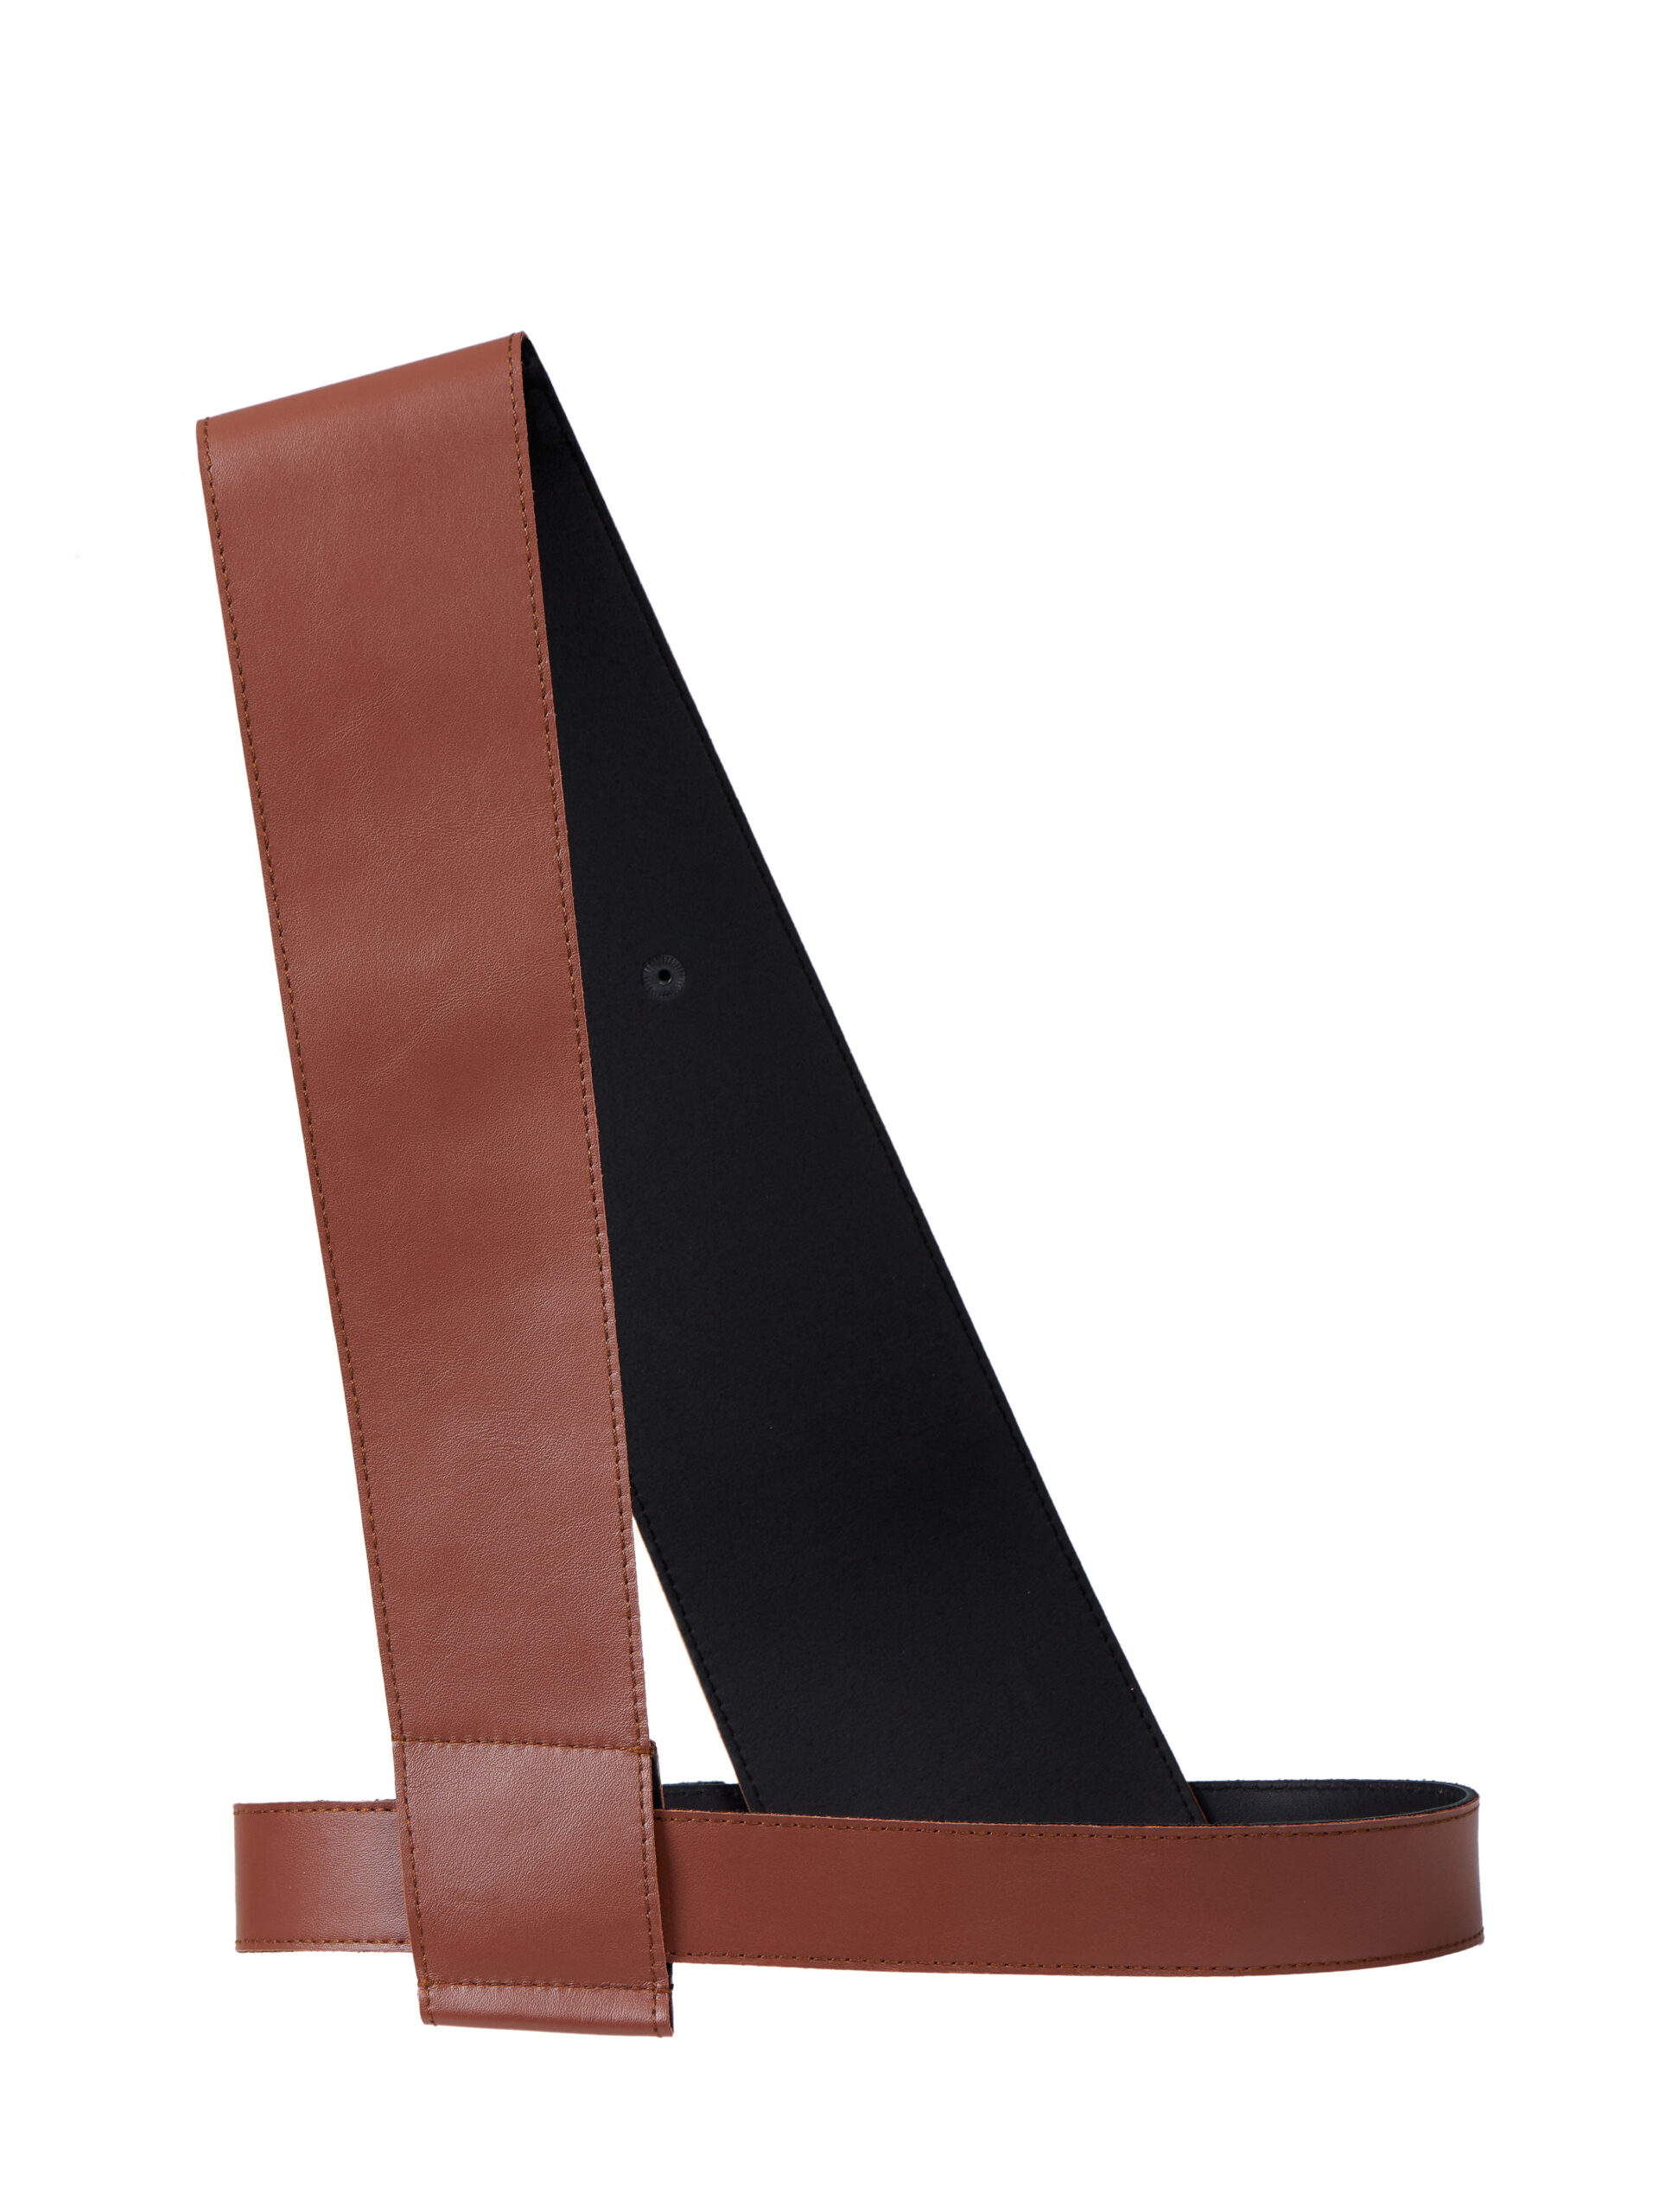 Vest-aksessuaari nahast rihmad konjakipruun / Vest-accessory’s leather straps cognac brown